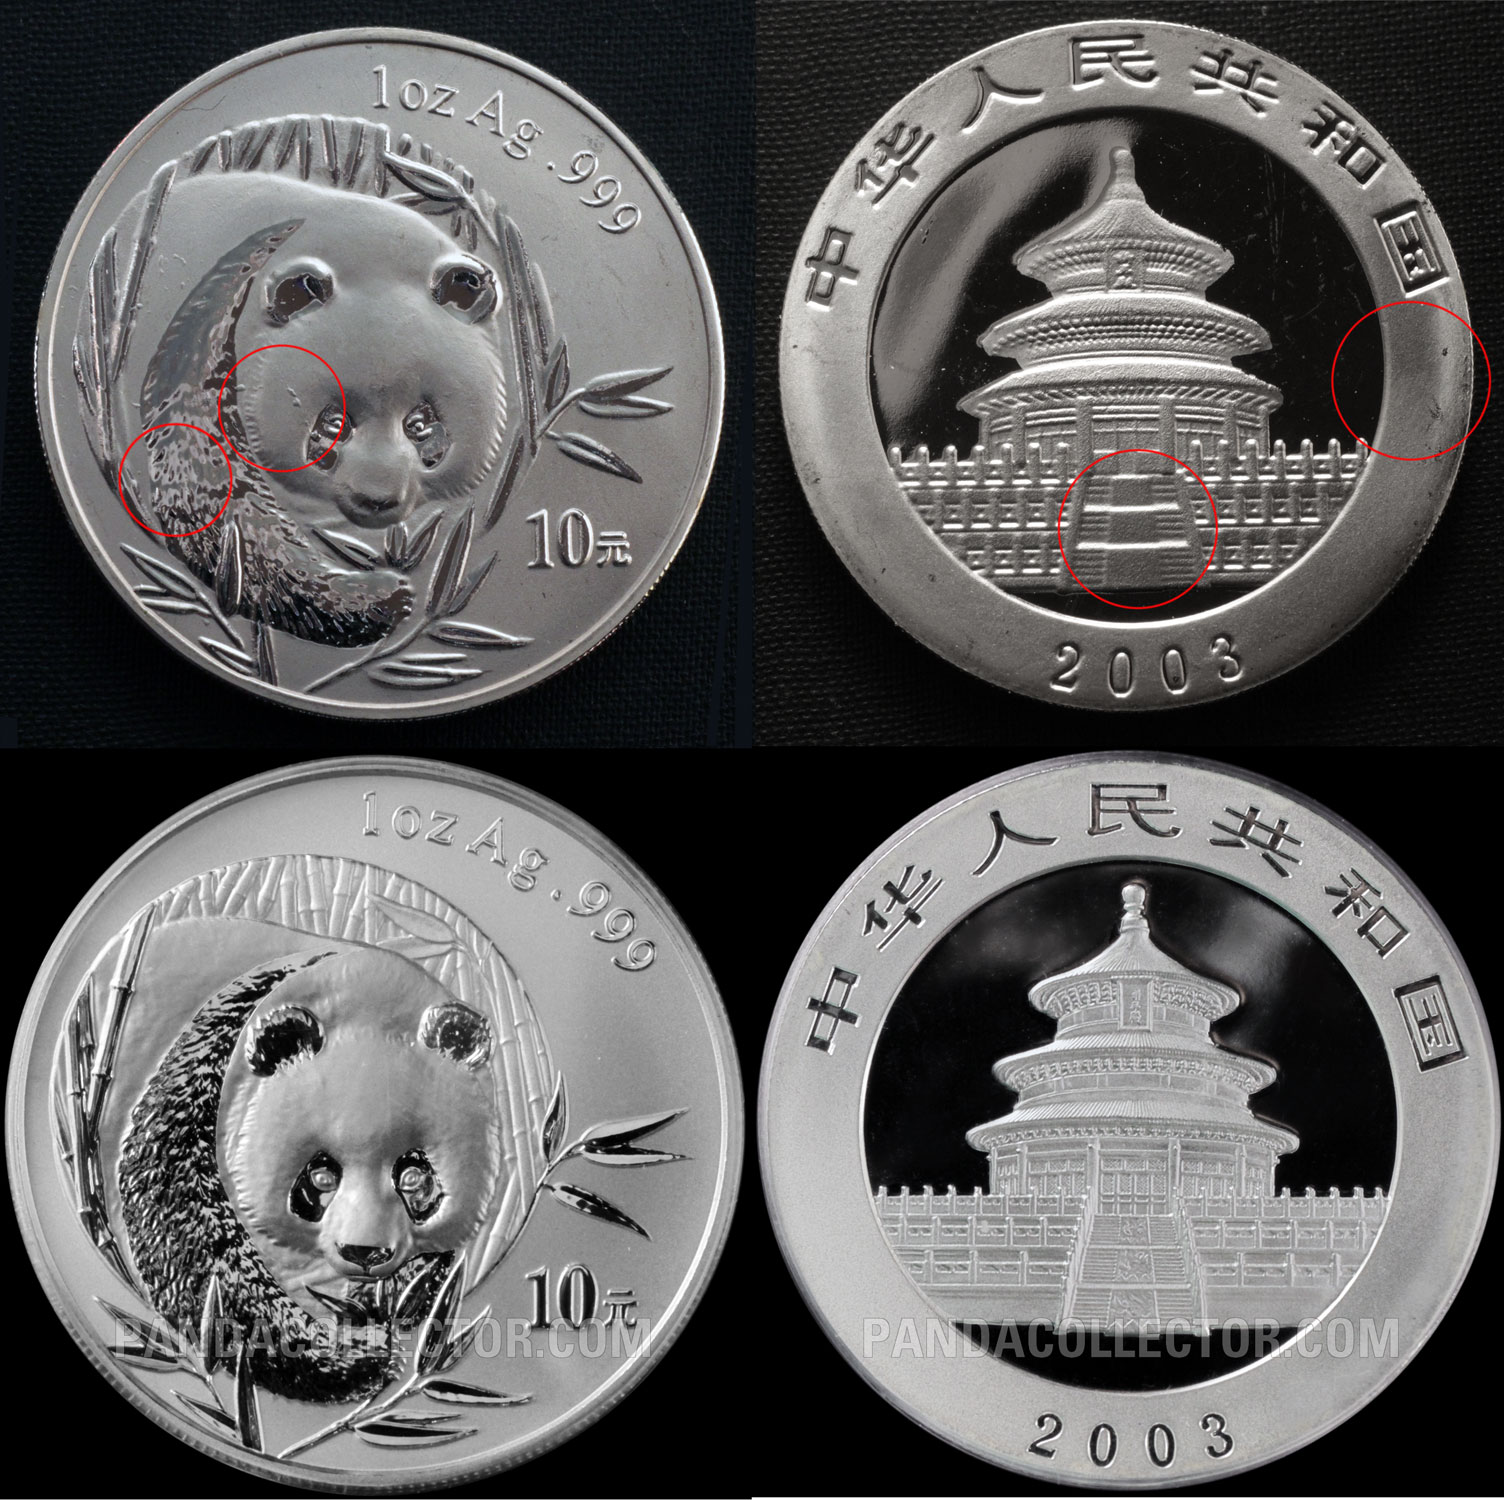 Fake silver panda coins